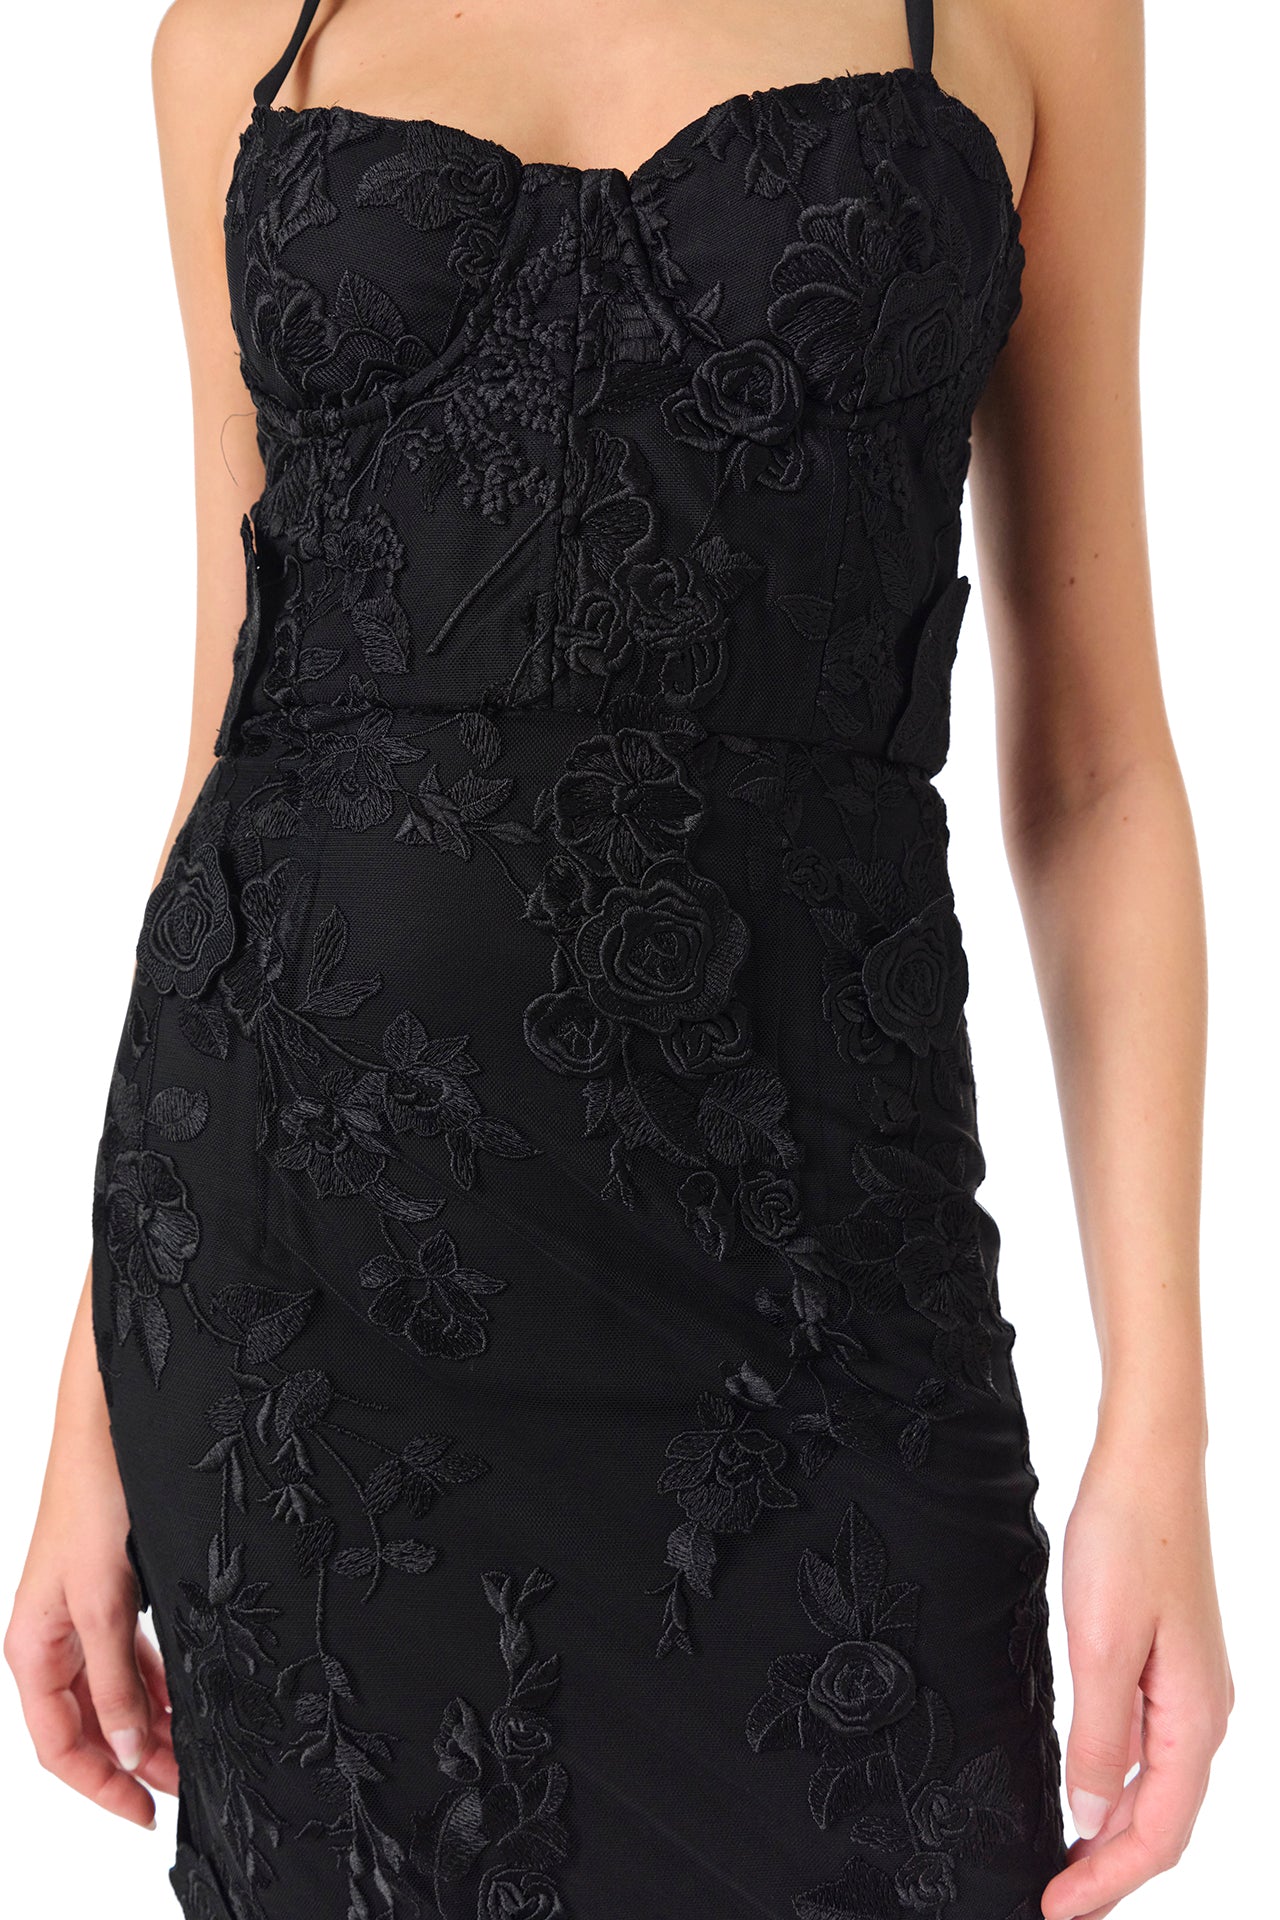 Monique Lhuillier Fall 2024 spaghetti strap lace midi dress with corseted bodice in Noir 3D lace- fabric.